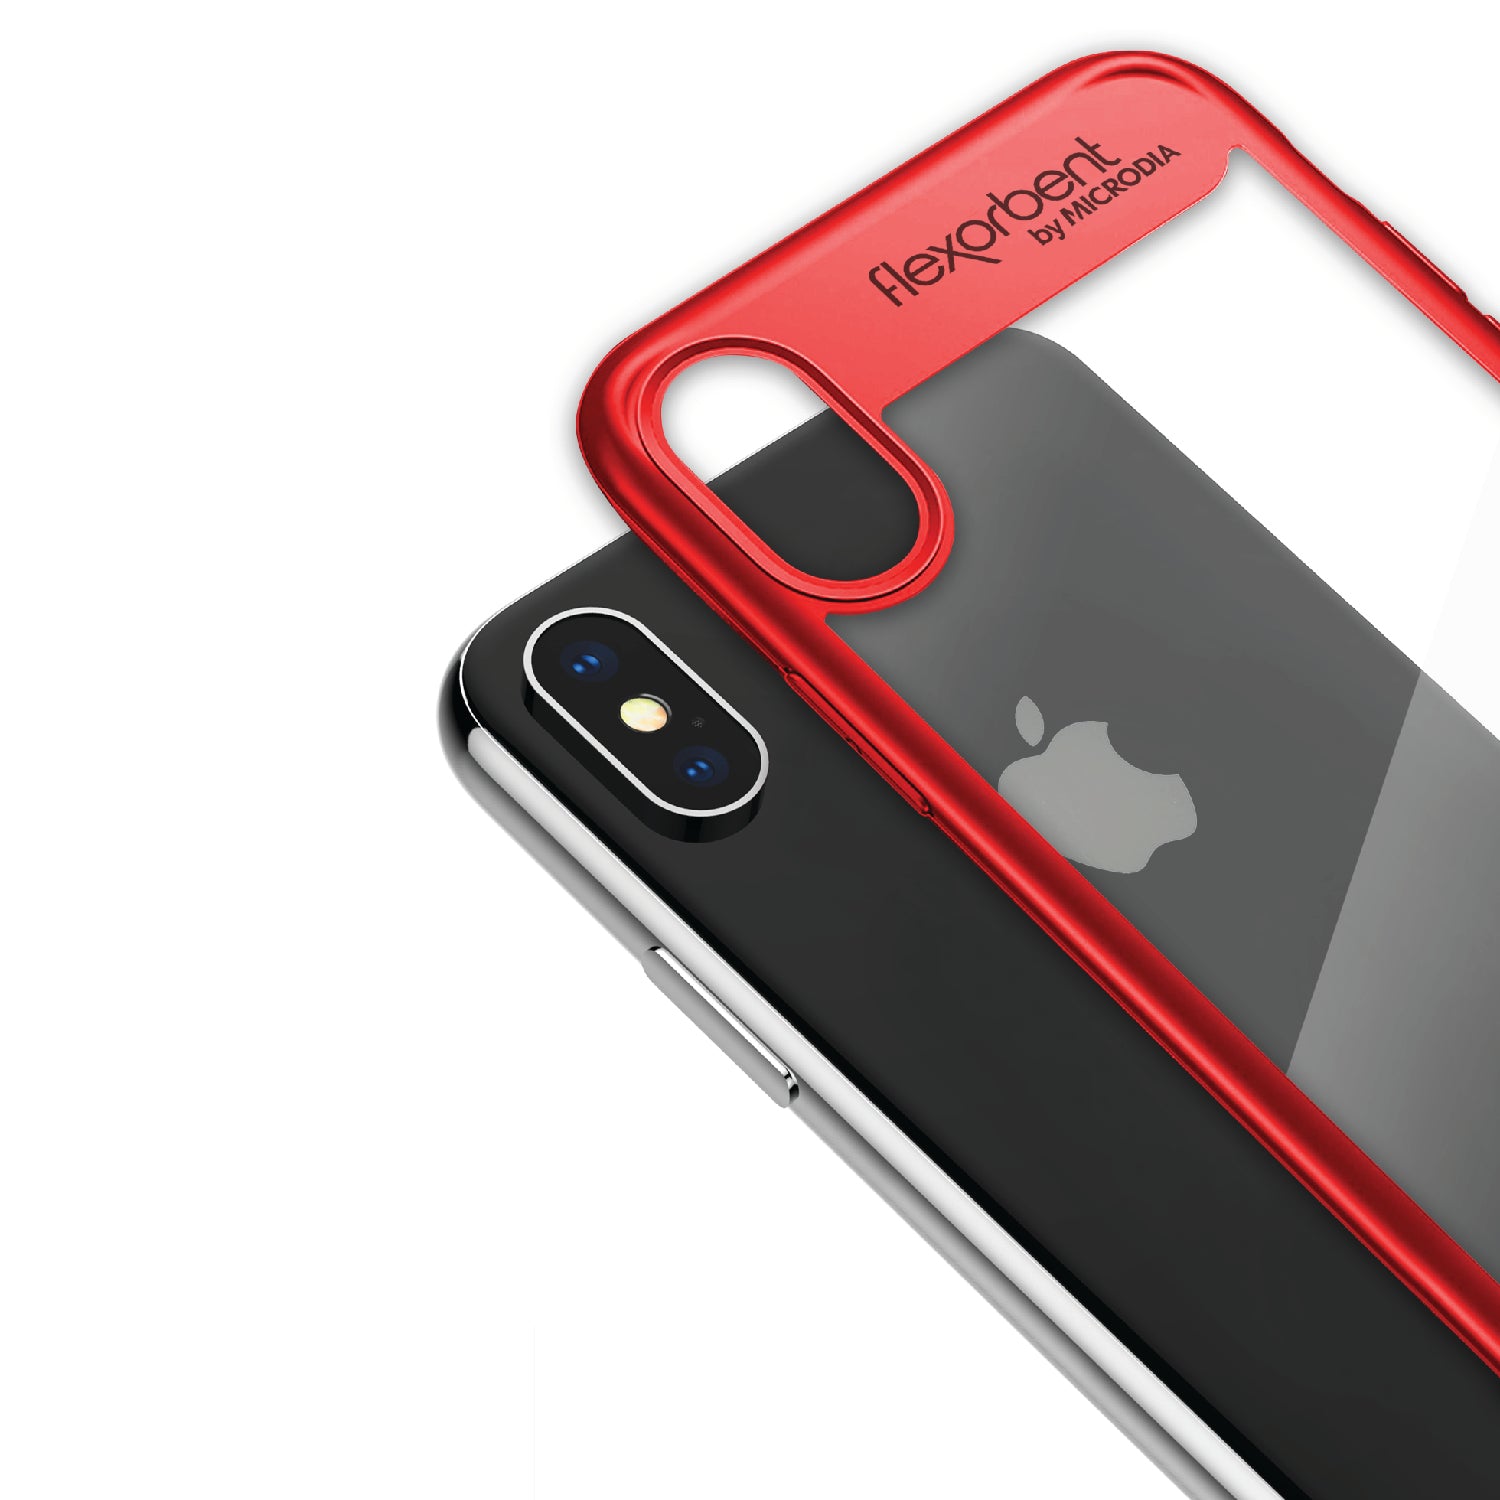 MICRODIA Flexorbent SAVILLE Phone Case, for iPhone X / 8 / 8 Plus